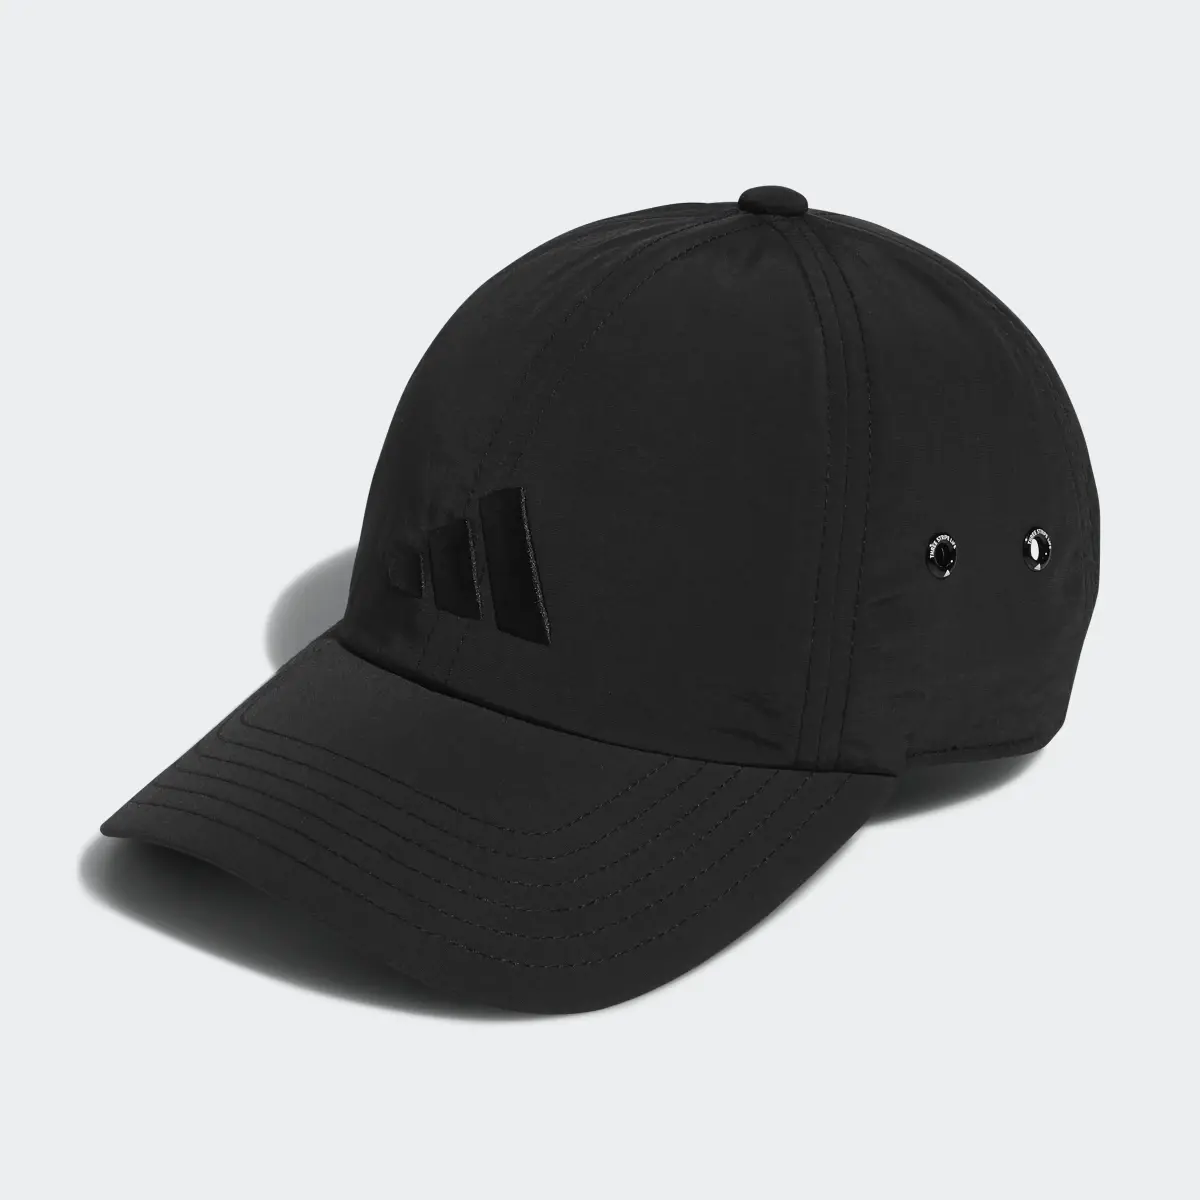 Adidas Influencer 3 Hat. 2